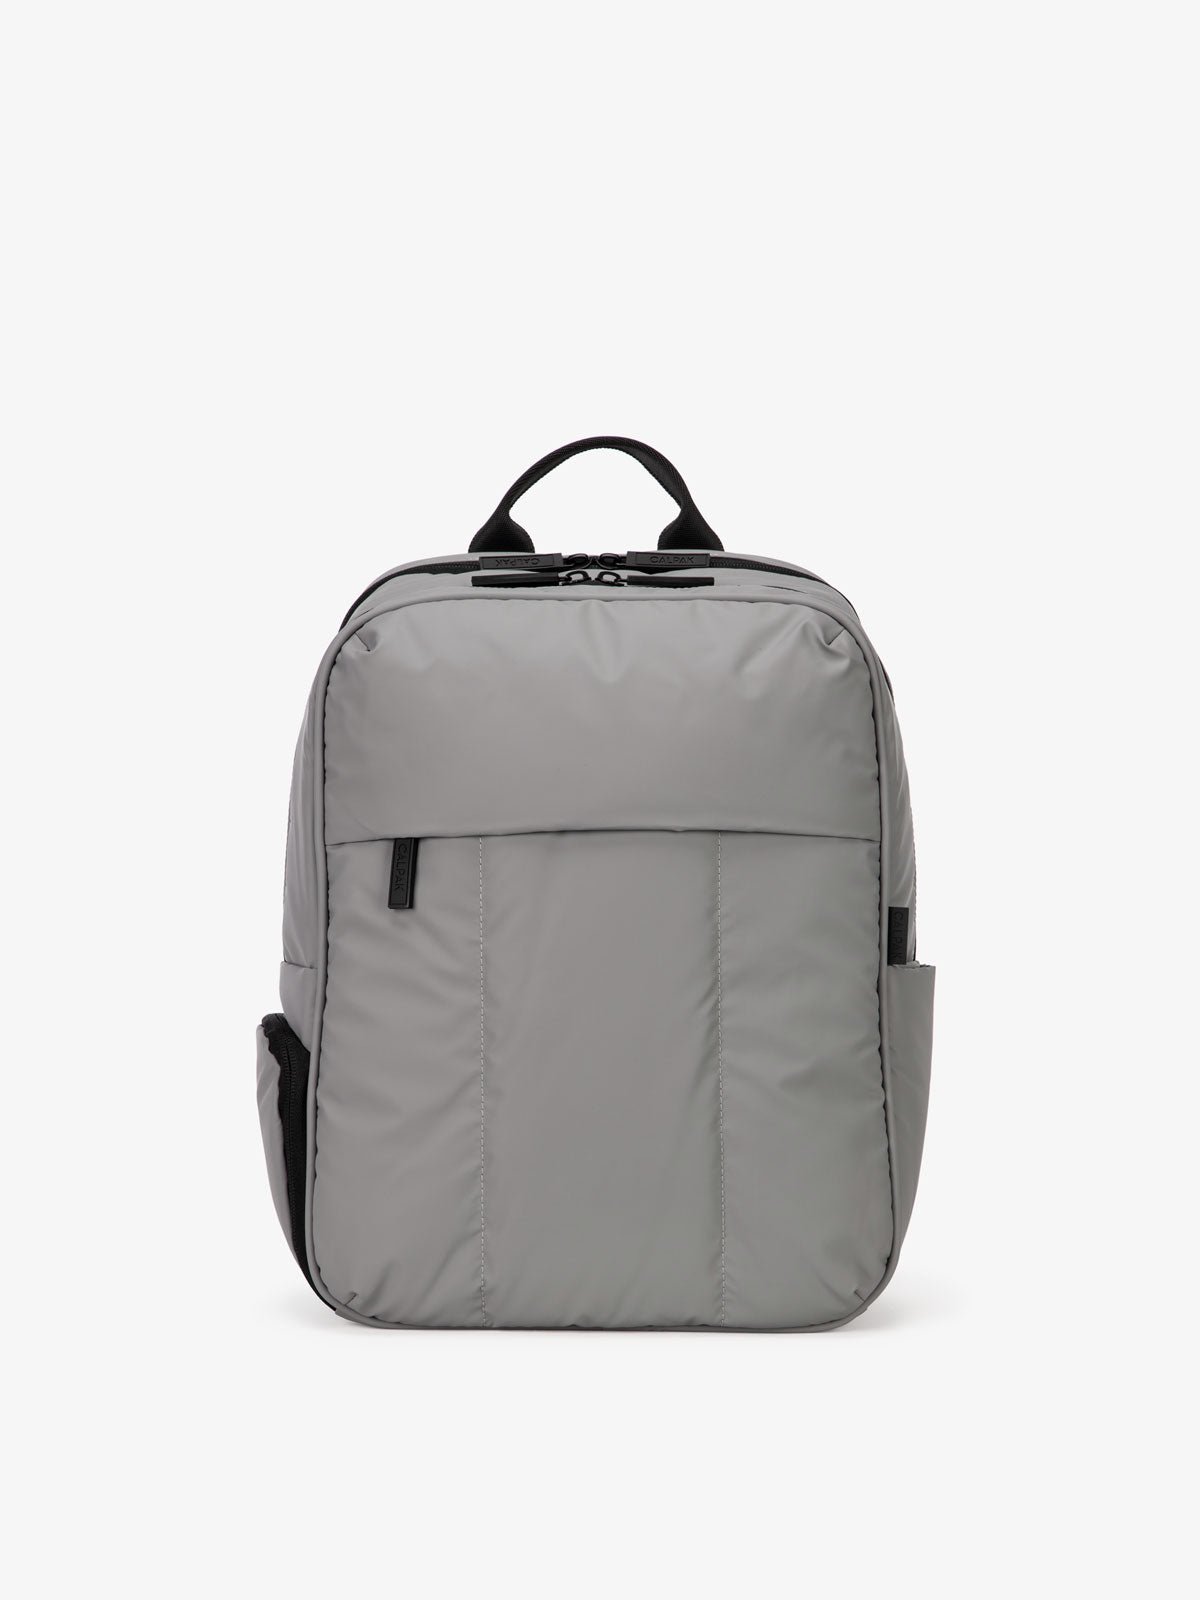 CALPAK Luka laptop backpack in grey